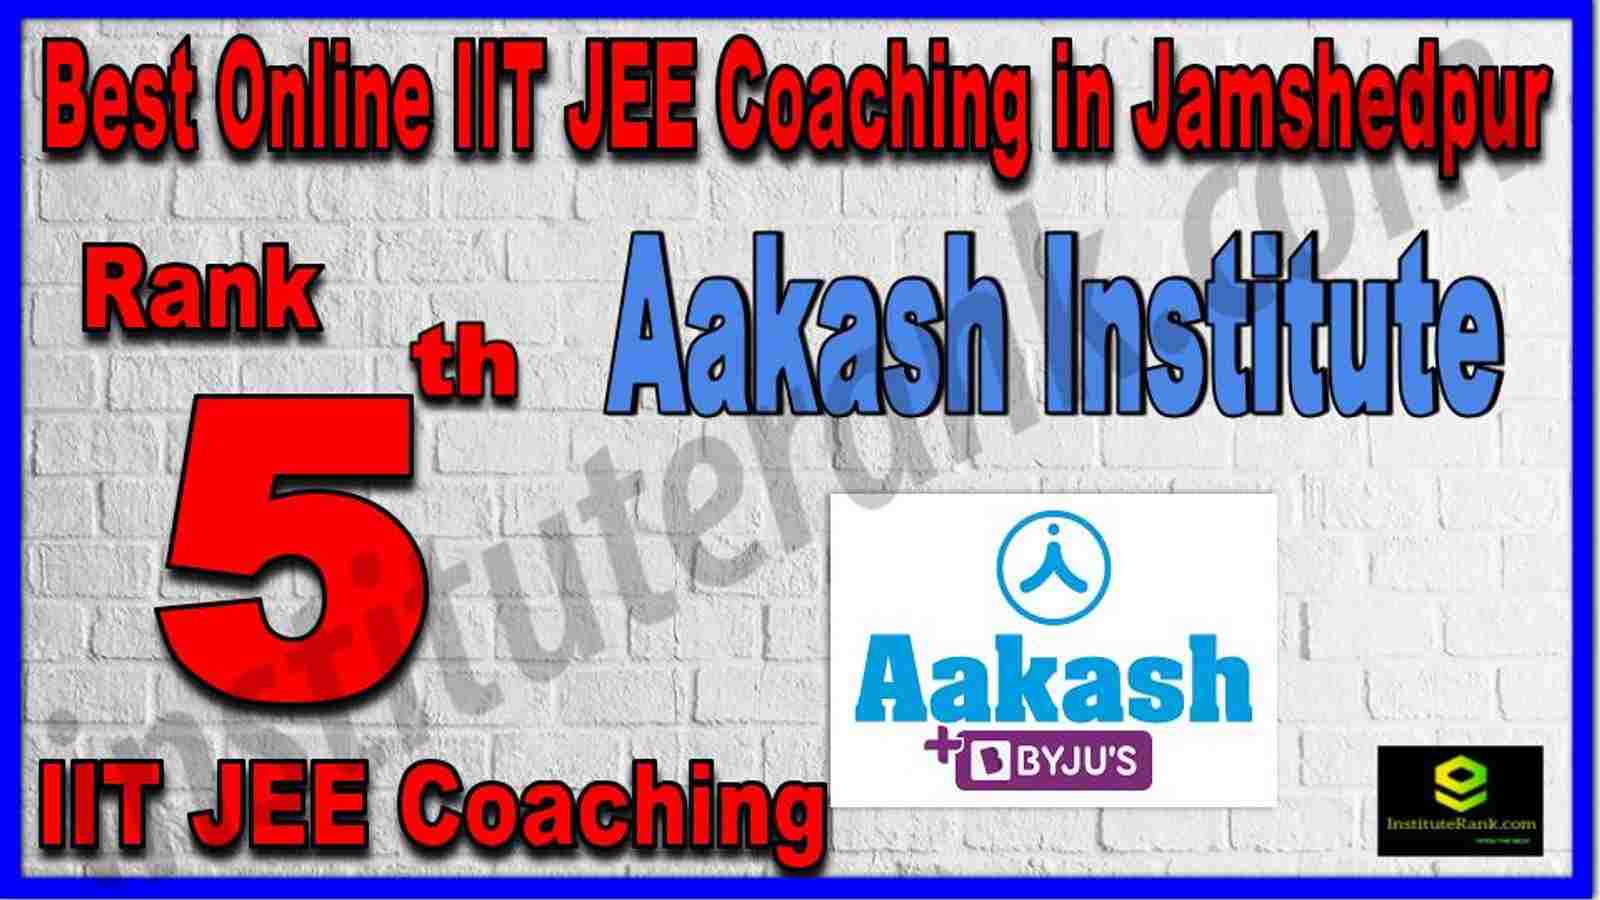 Rank 5th Best Online IIT JEE Coaching in Jamshedpur